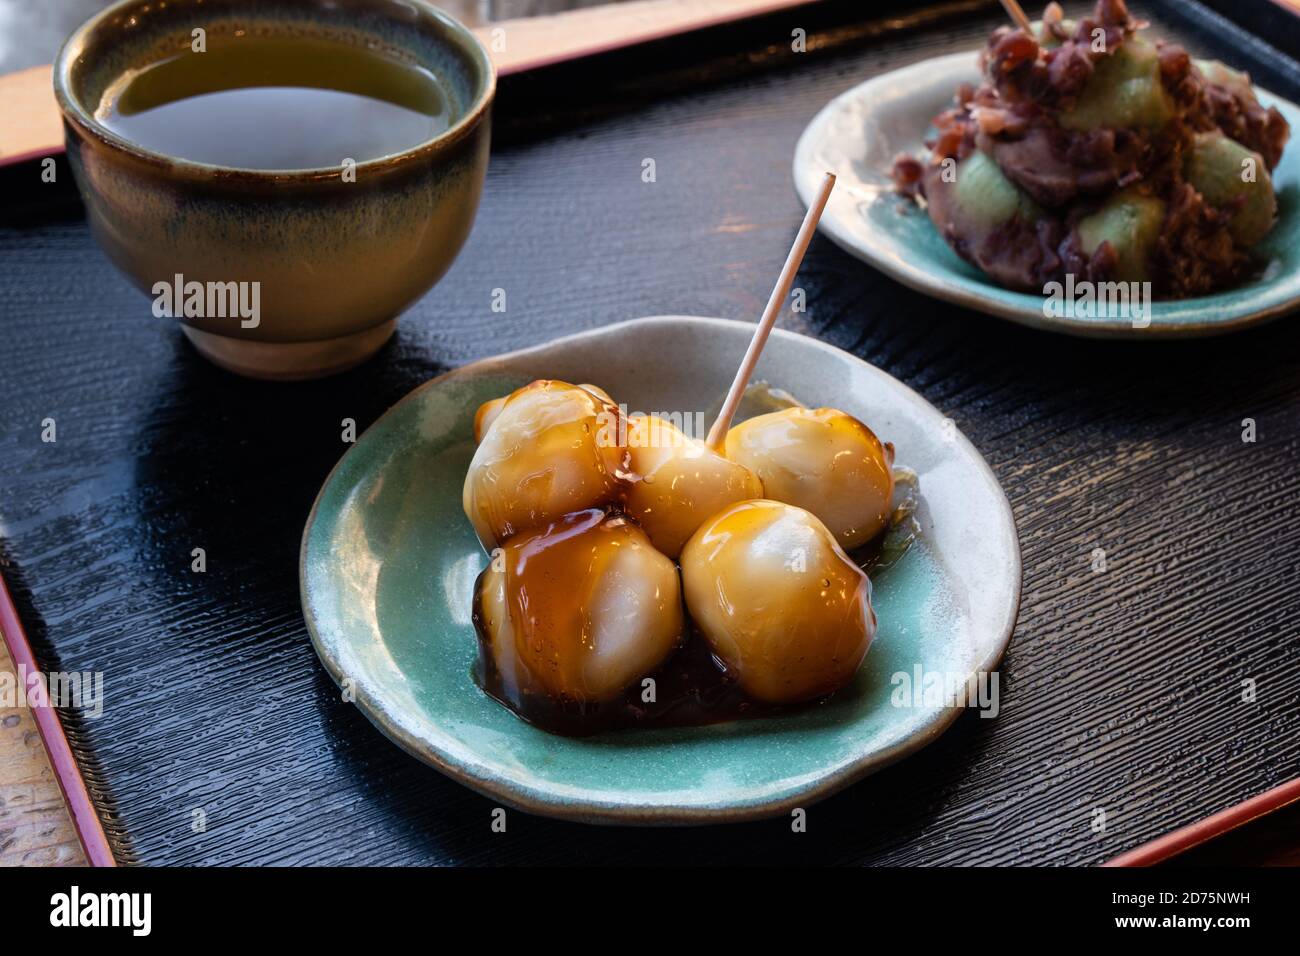 Dango, a type of Japanese sweet rice dumpling, next to green tea. Stock Photo